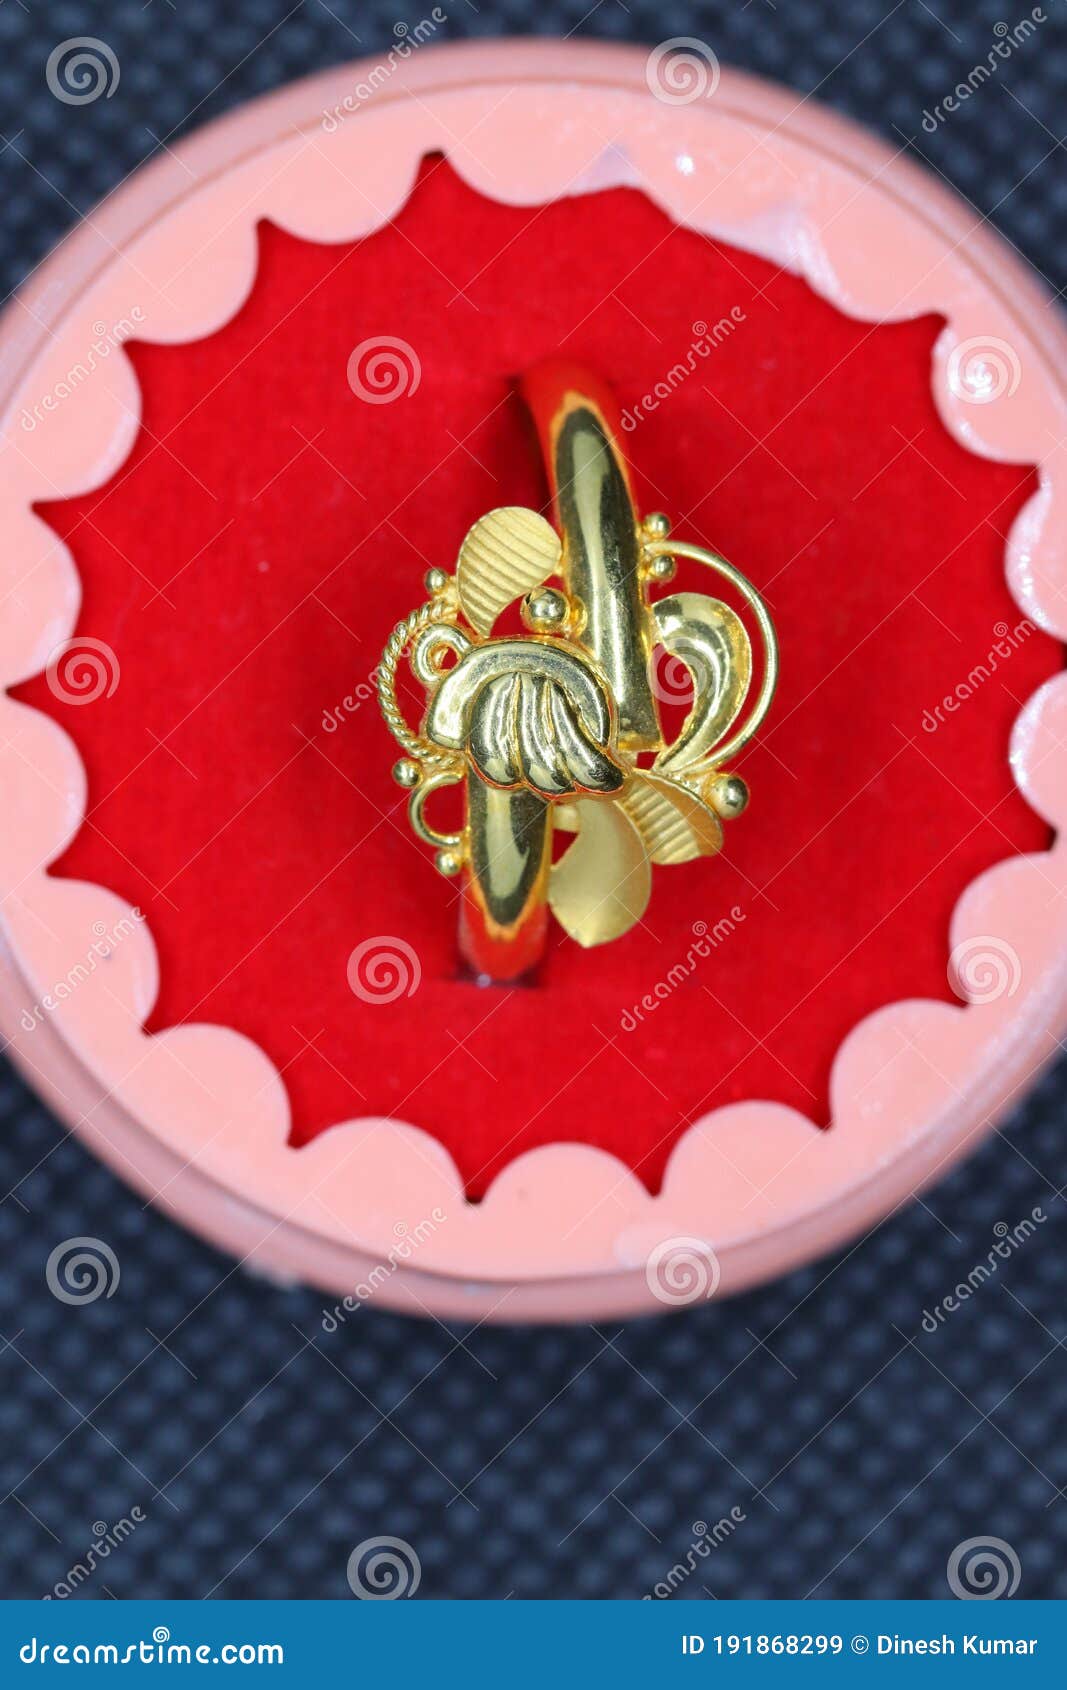 Gold Plated Panchadhatu Large Flower Design Free Size Ring For Women